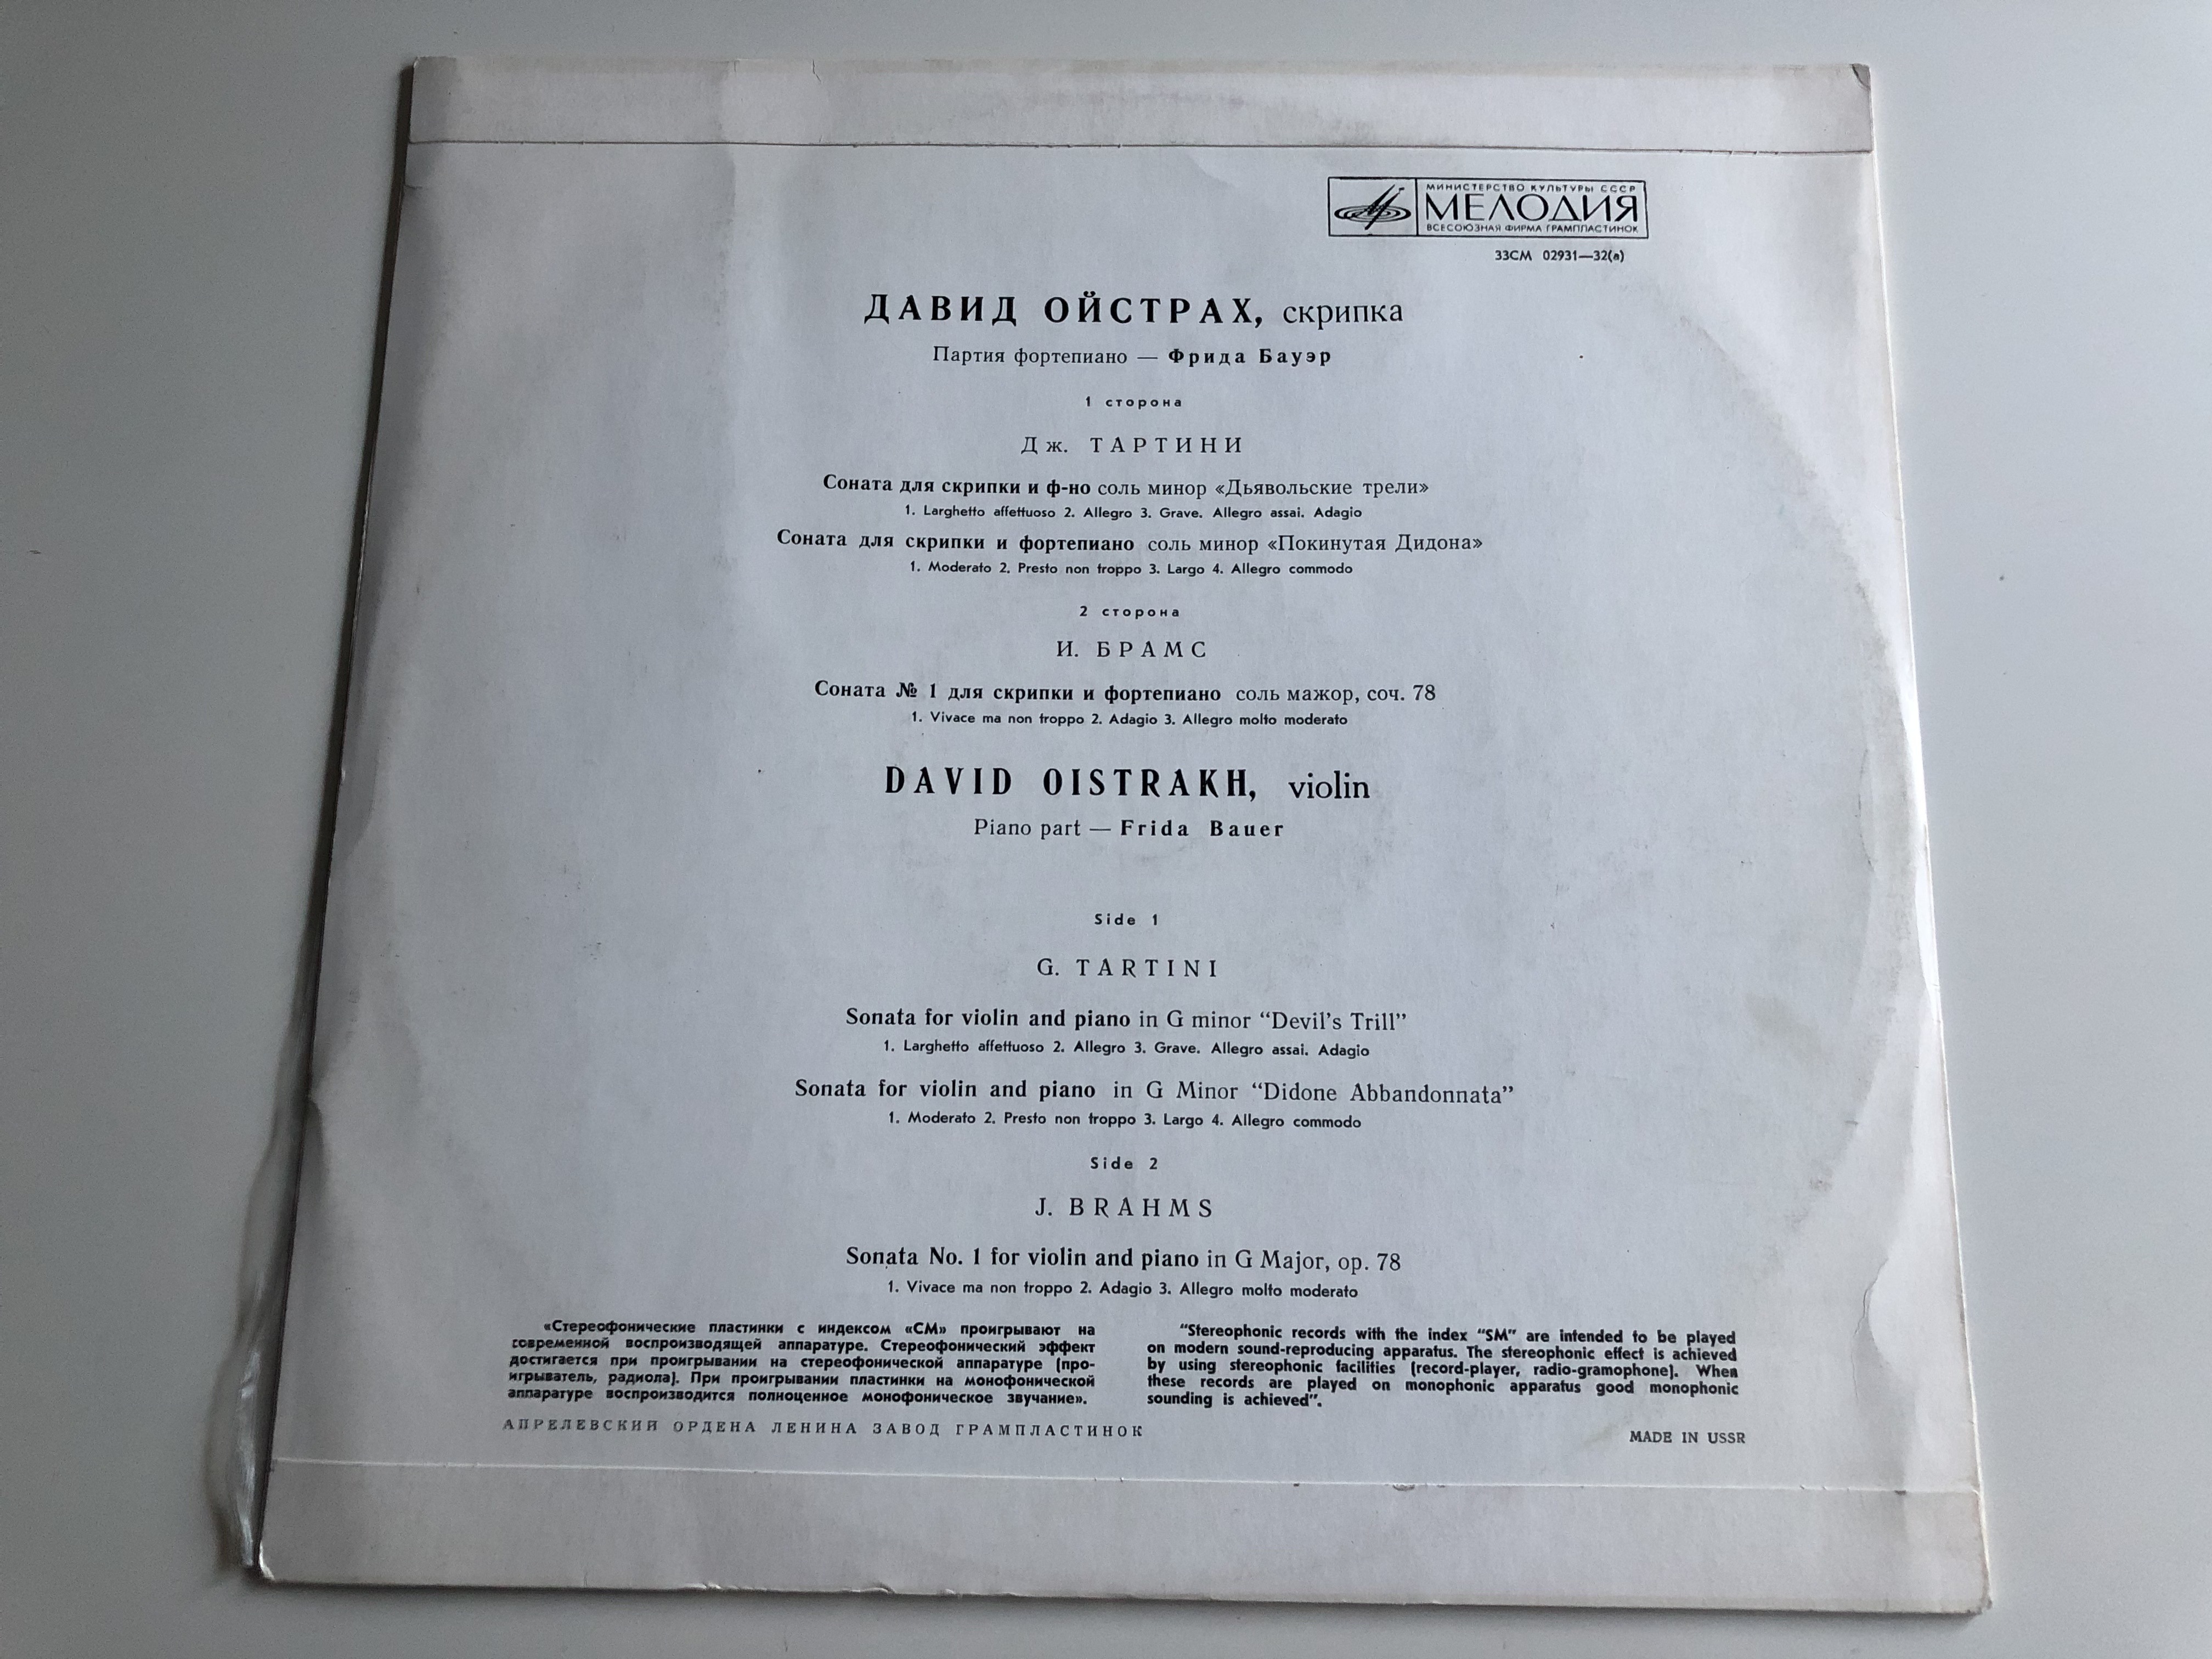 david-oistrakh-sonatas-by-g.-tartini-and-j.-brahms-frieda-bauer-sonatas-for-violin-and-piano-lp-33cm-02931-32-a-2-.jpg